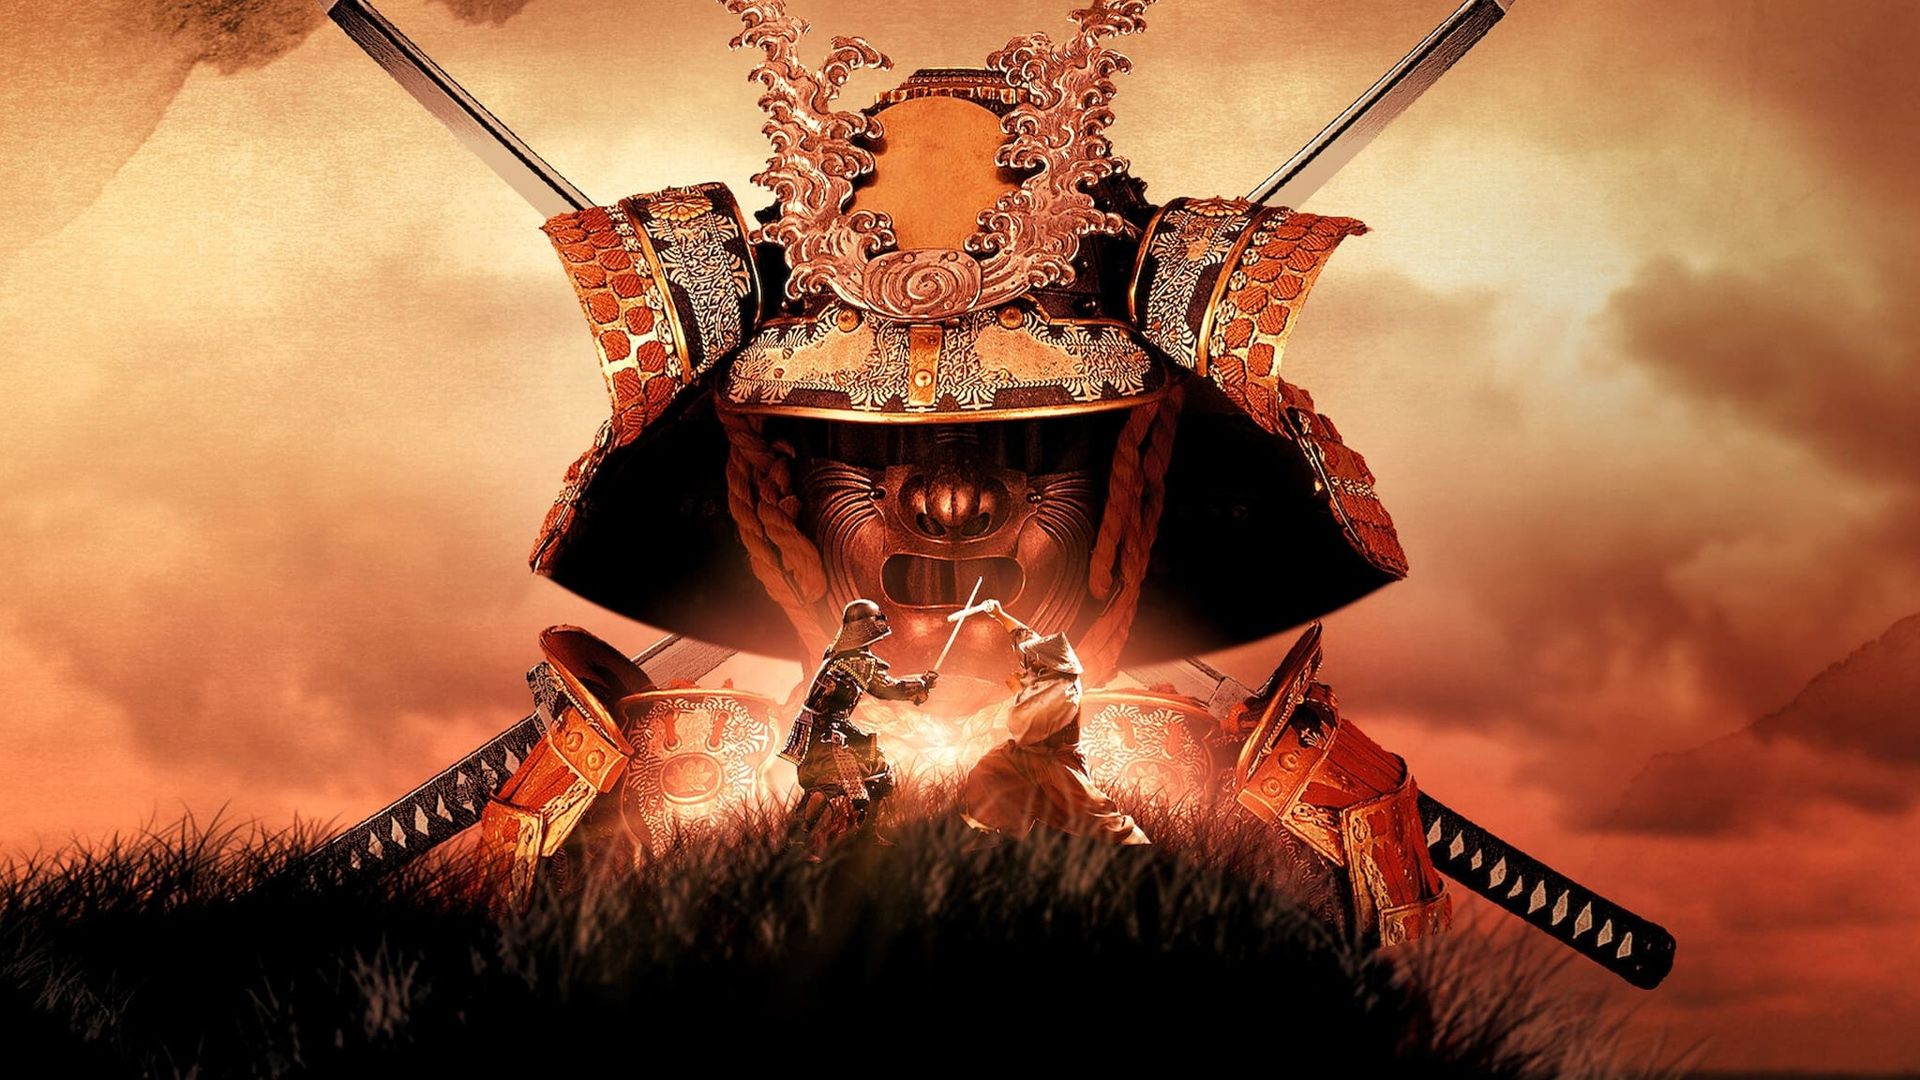 Age of Samurai: Battle for Japan background